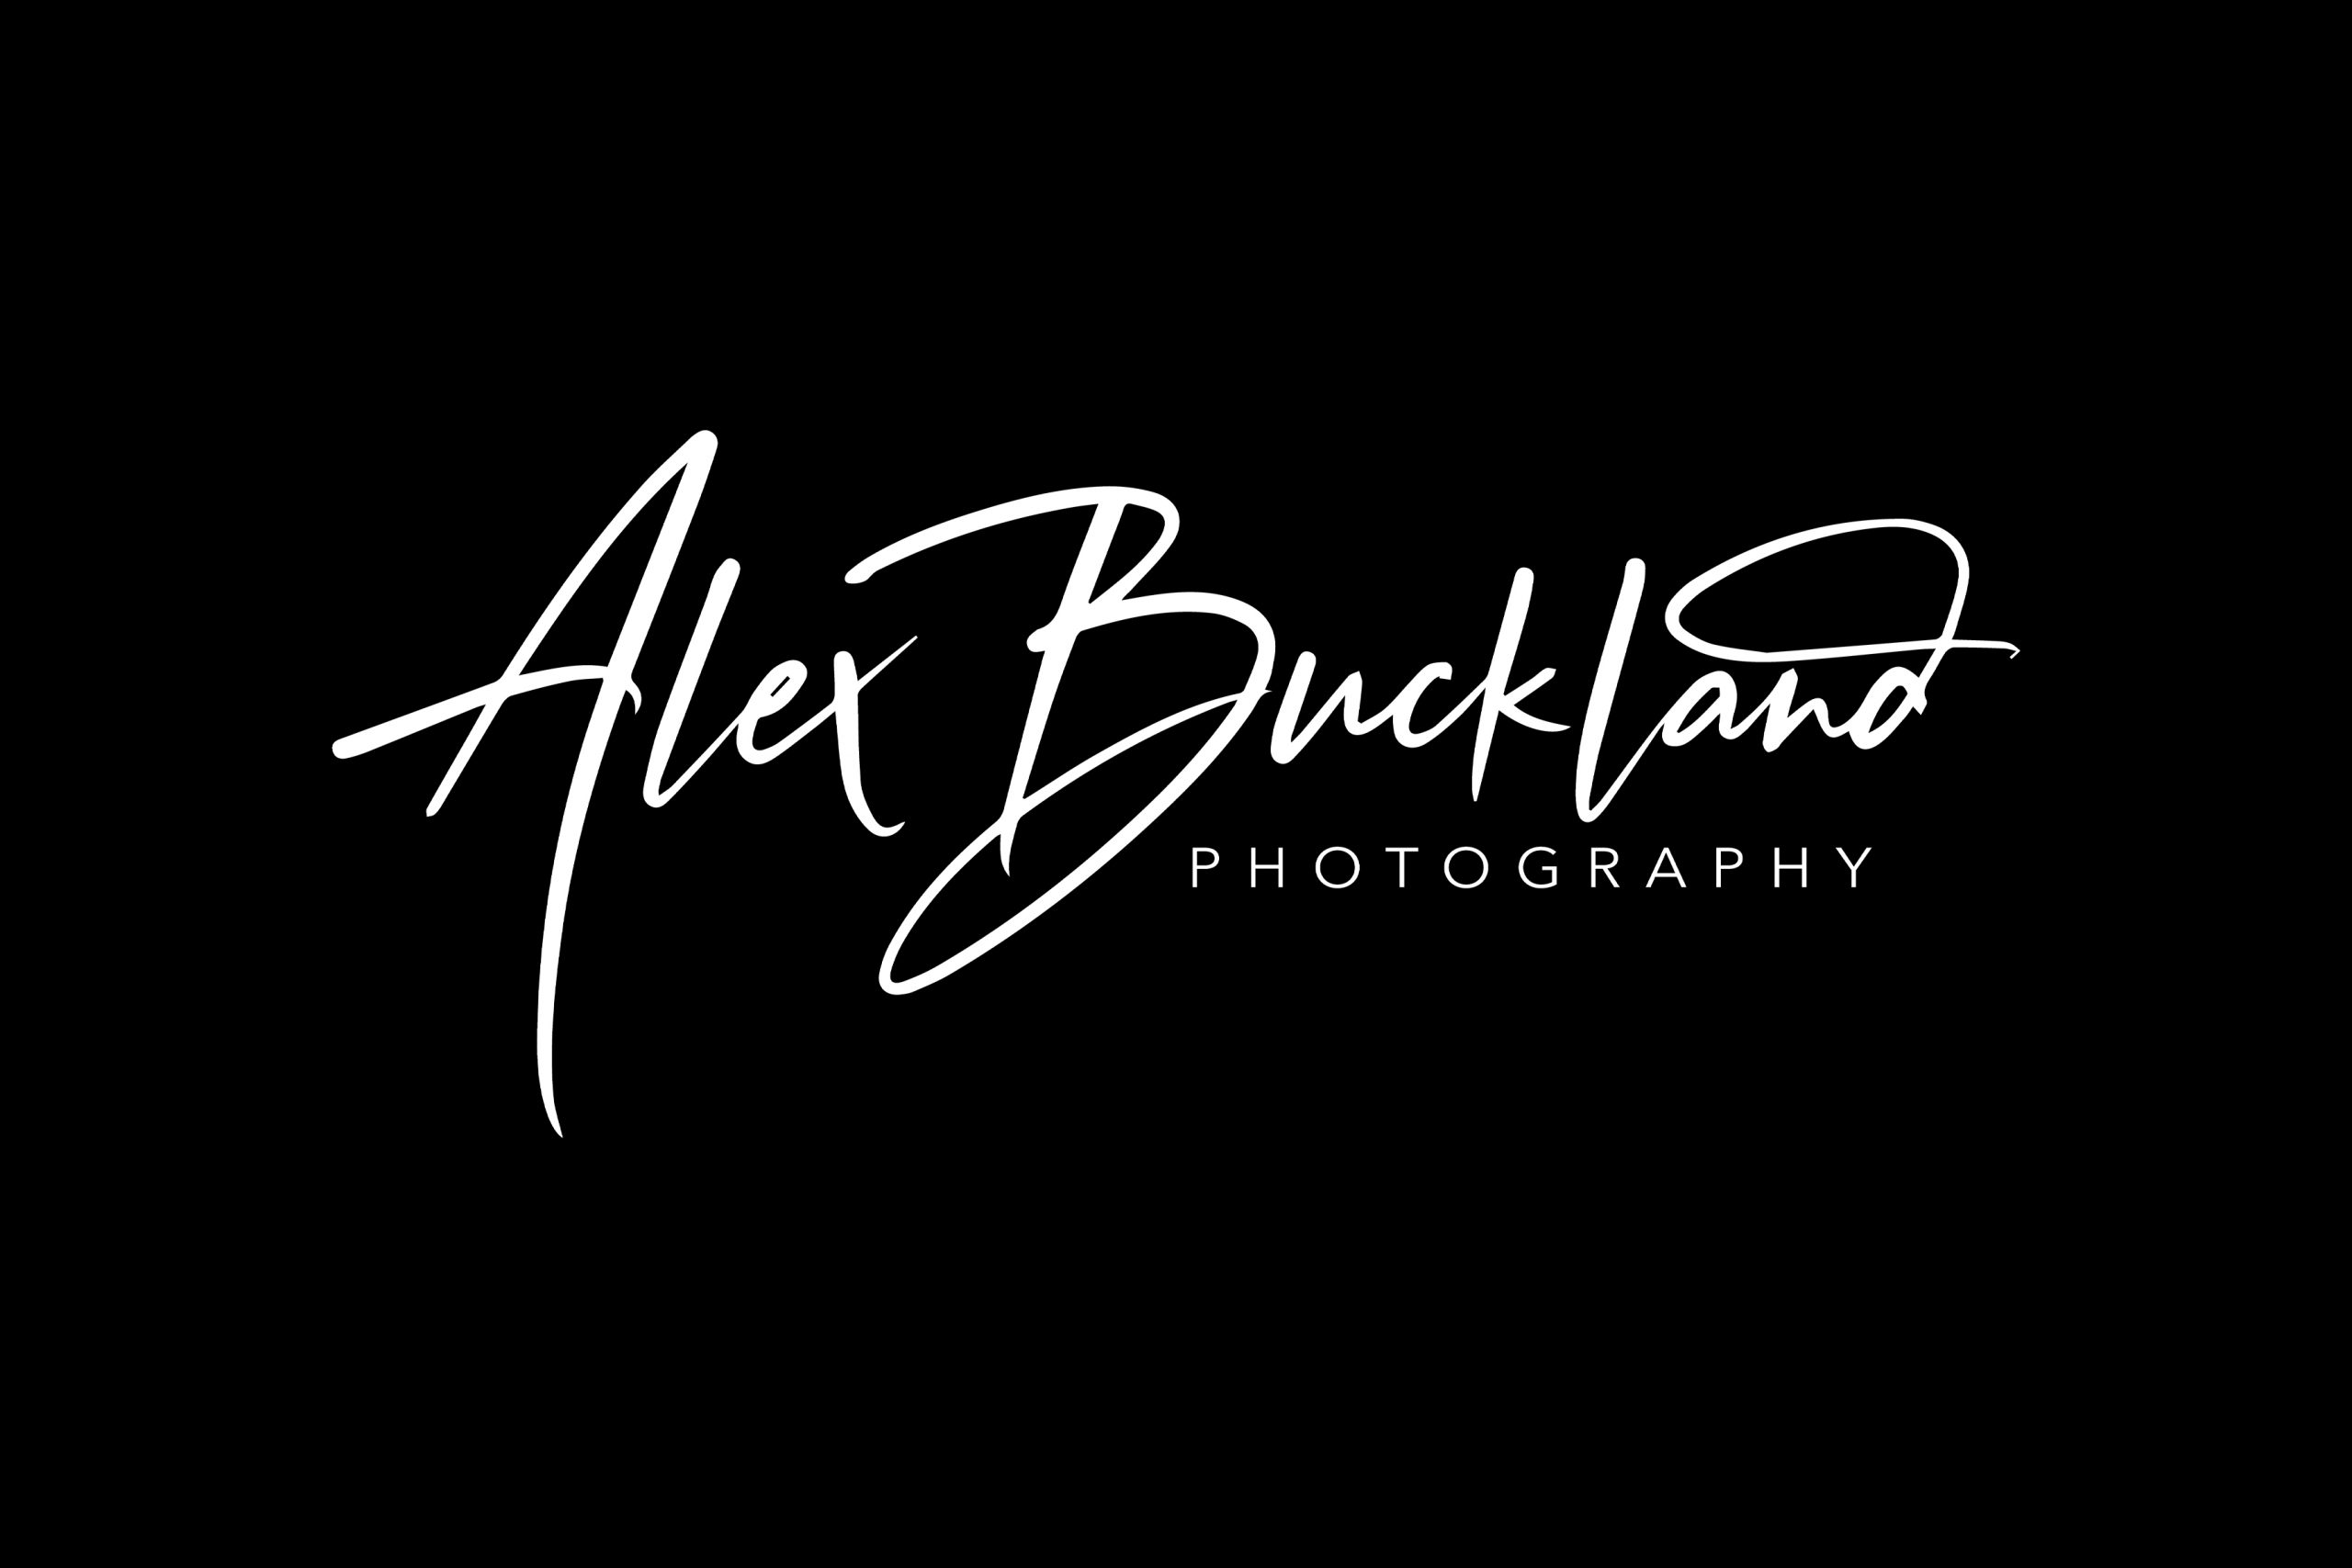 Alex Buckland Photography